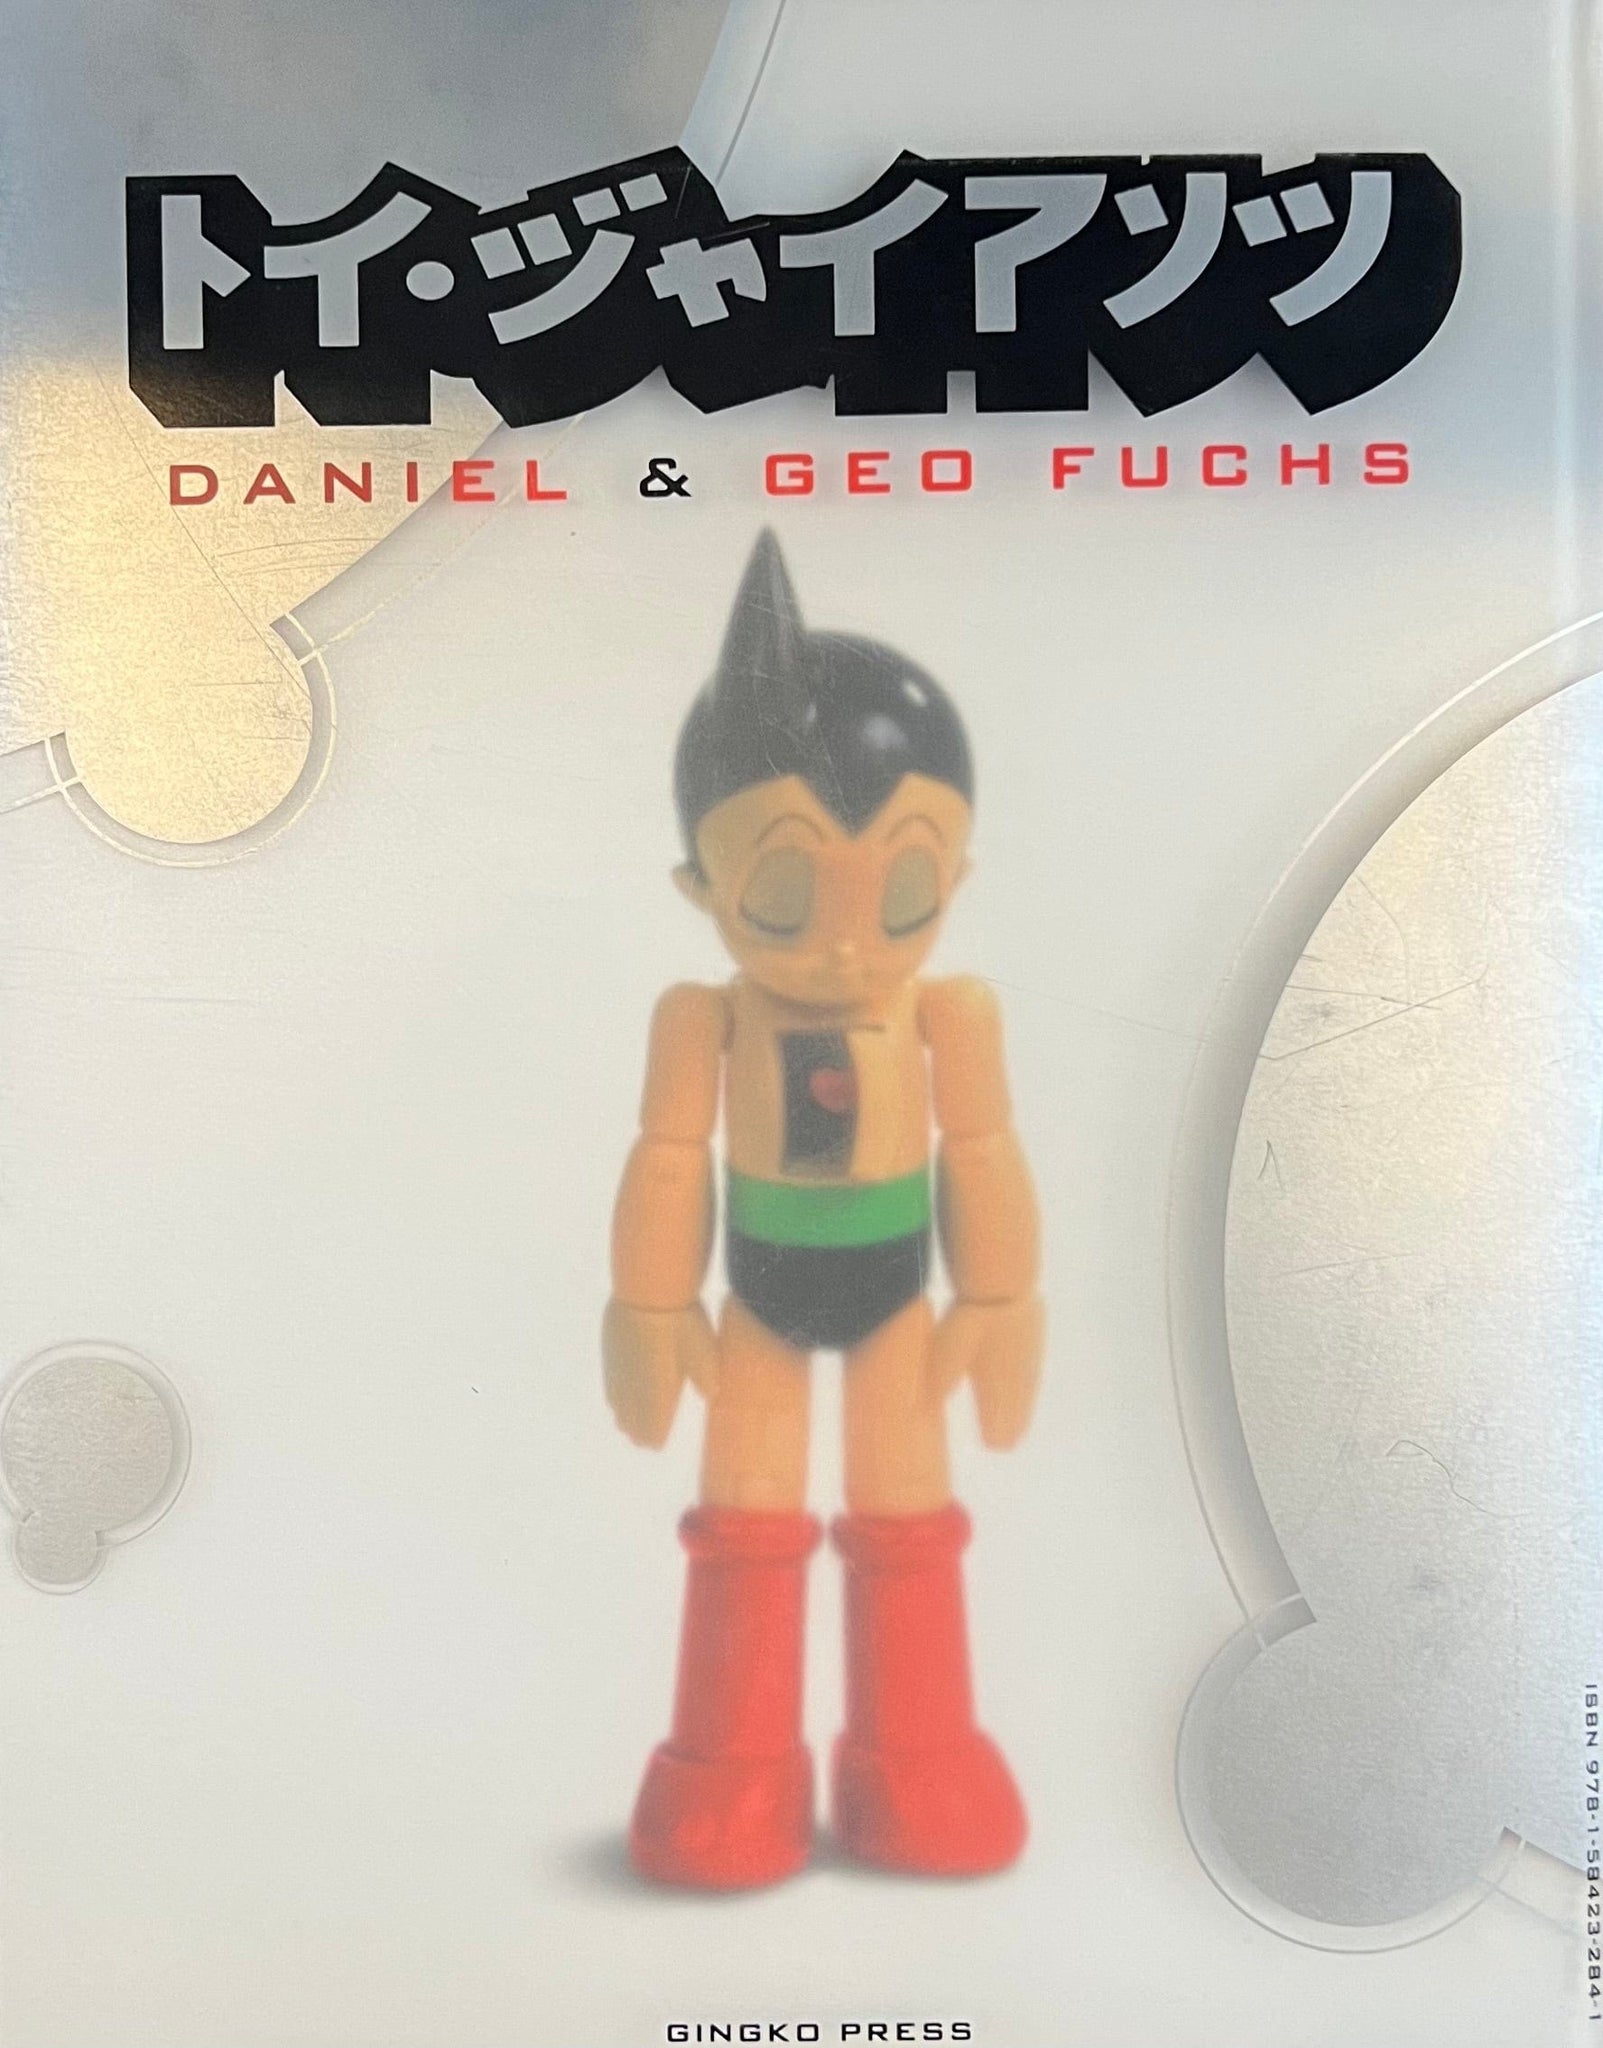 Daniel & Geo Fuchs - Toy Giants, 2007